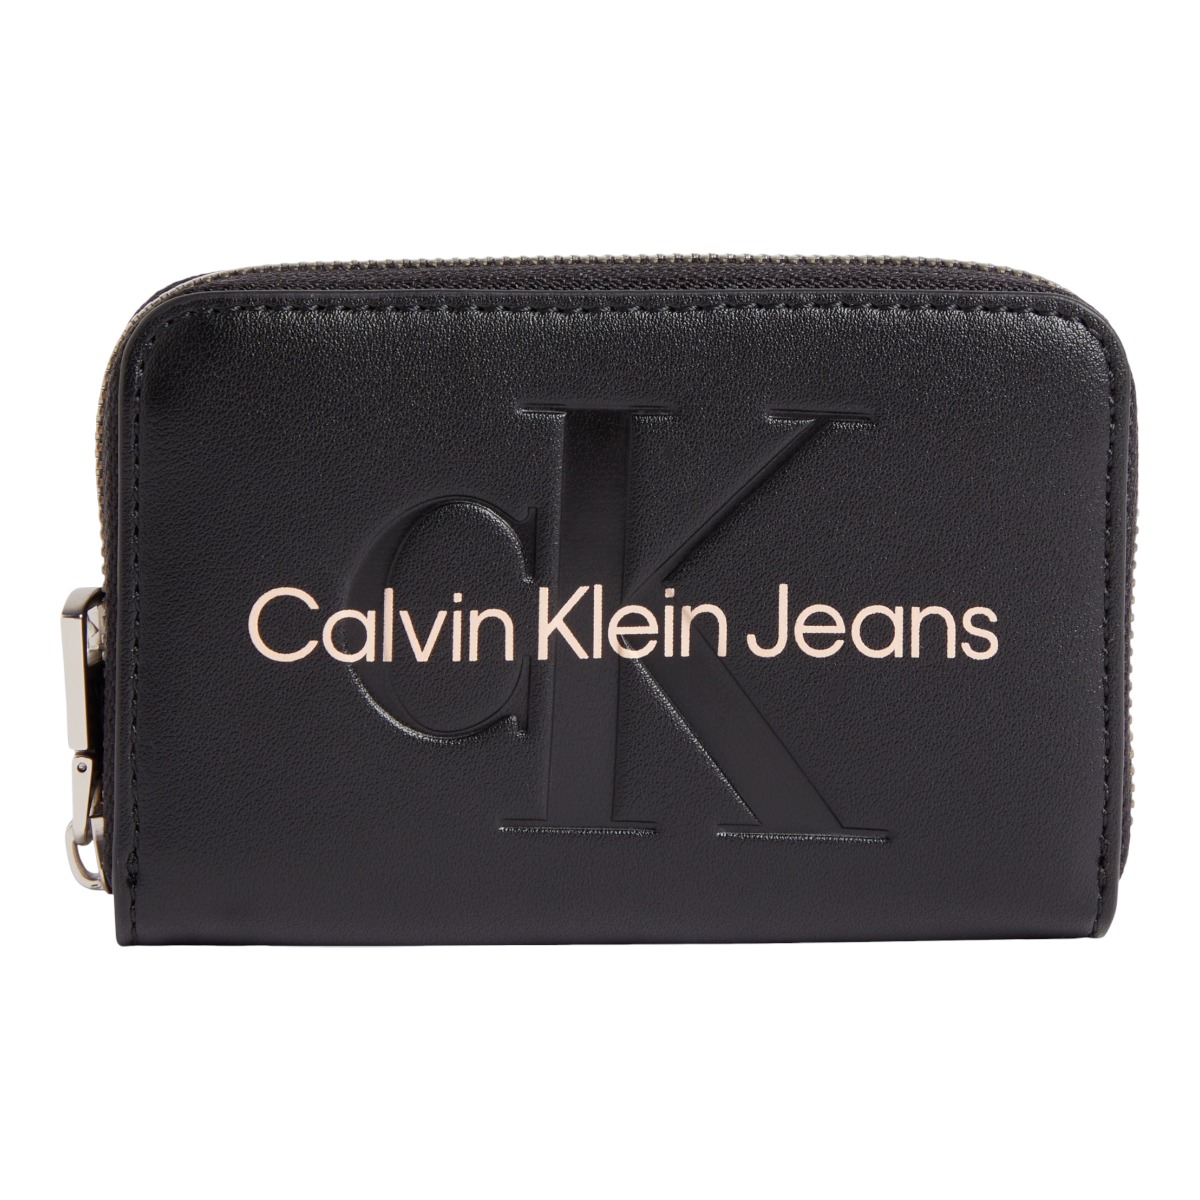 Calvin Klein Jeans Woman's Wallet 8720108589840